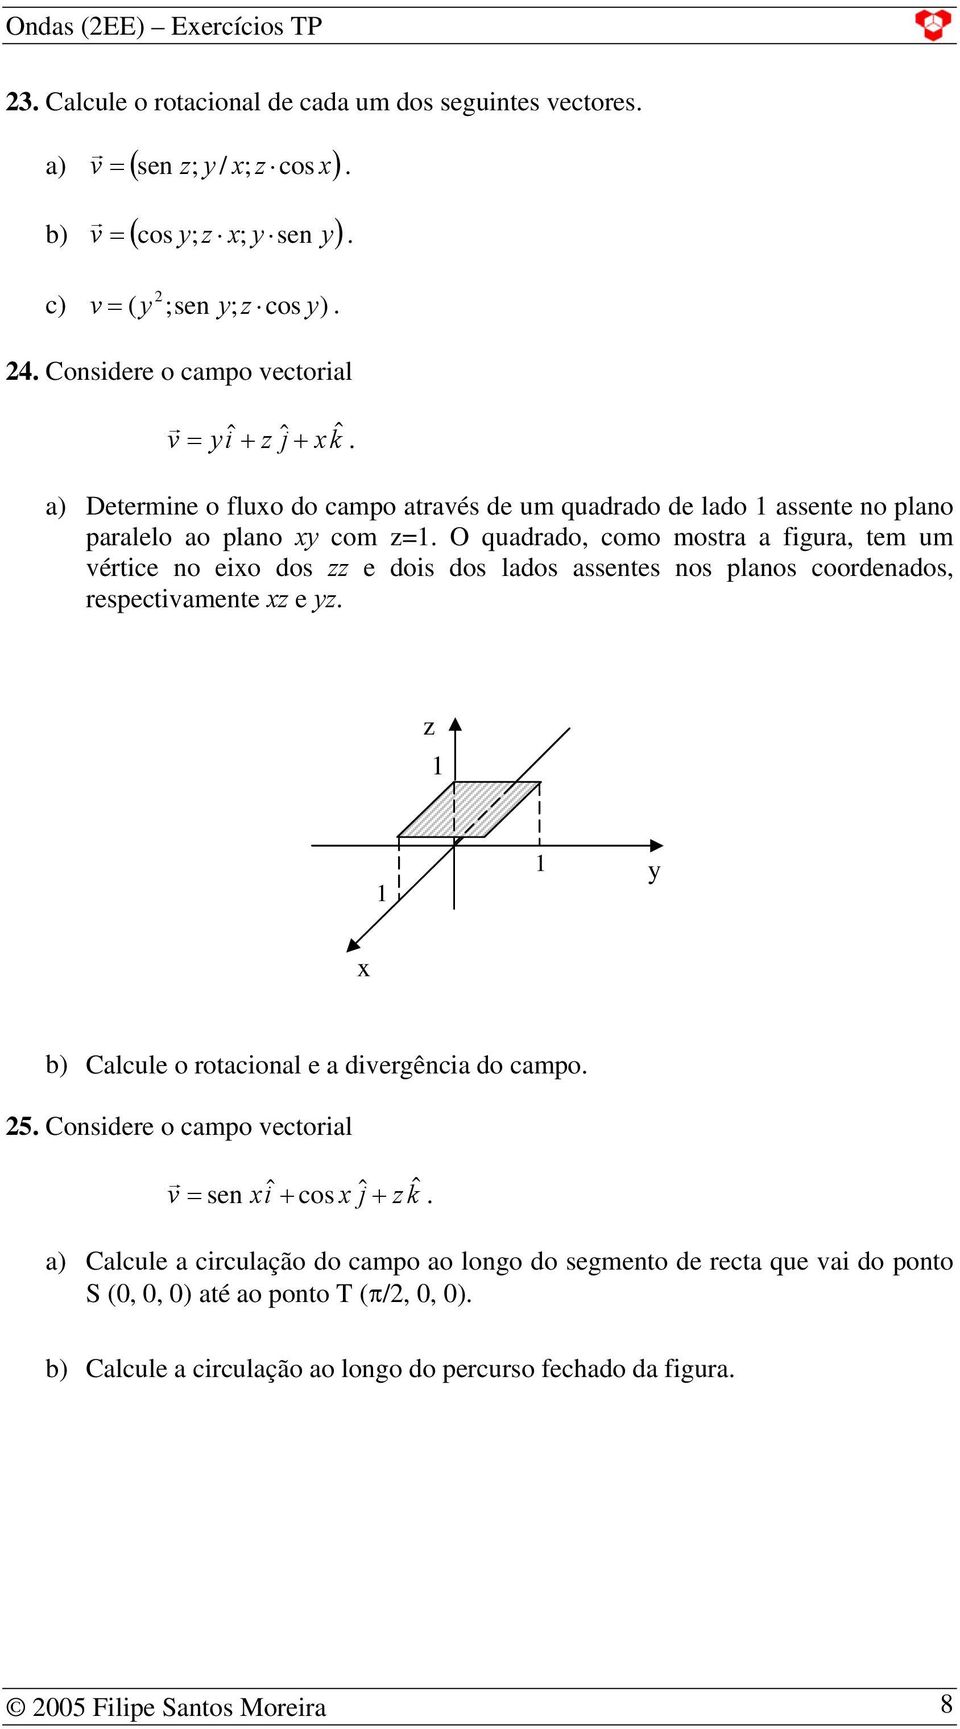 lados assentes nos planos coordenados, respectivamente e b) Calcule o rotacional e a divergência do campo 5 Considere o campo vectorial v = sen iˆ + cos ˆj + kˆ a) Calcule a circulação